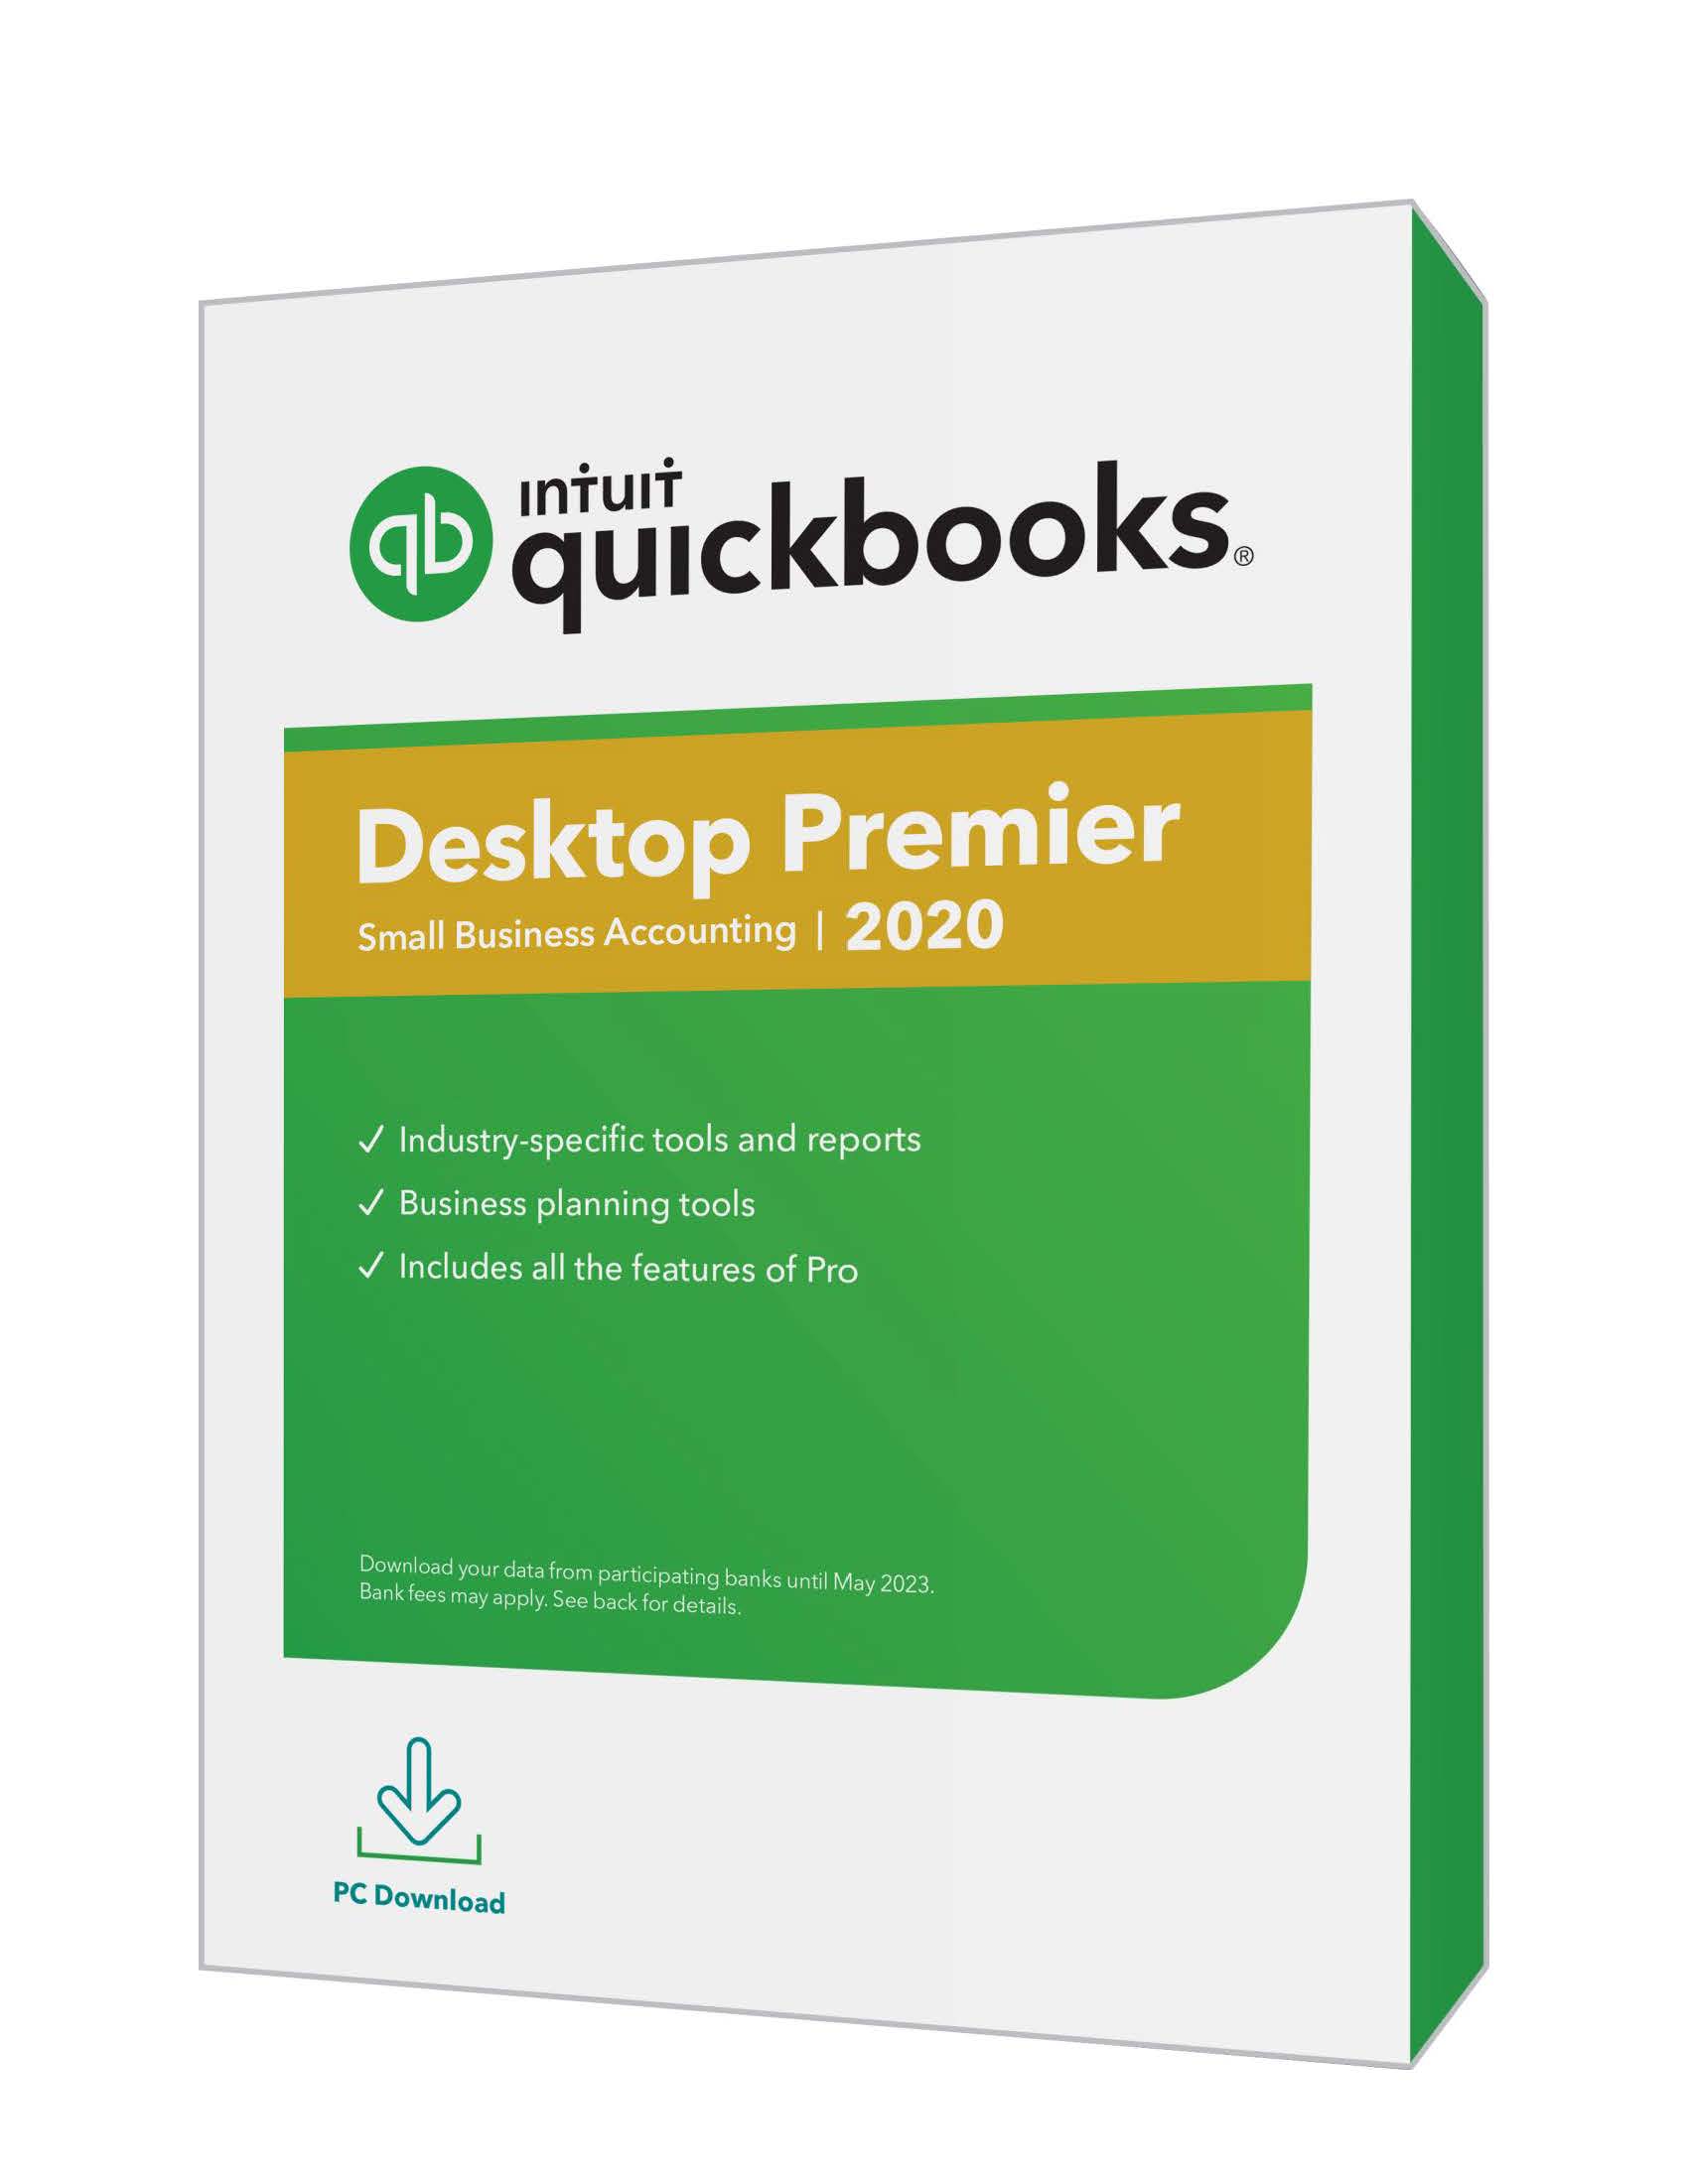 quickbooks desktop pro 2020 for mac